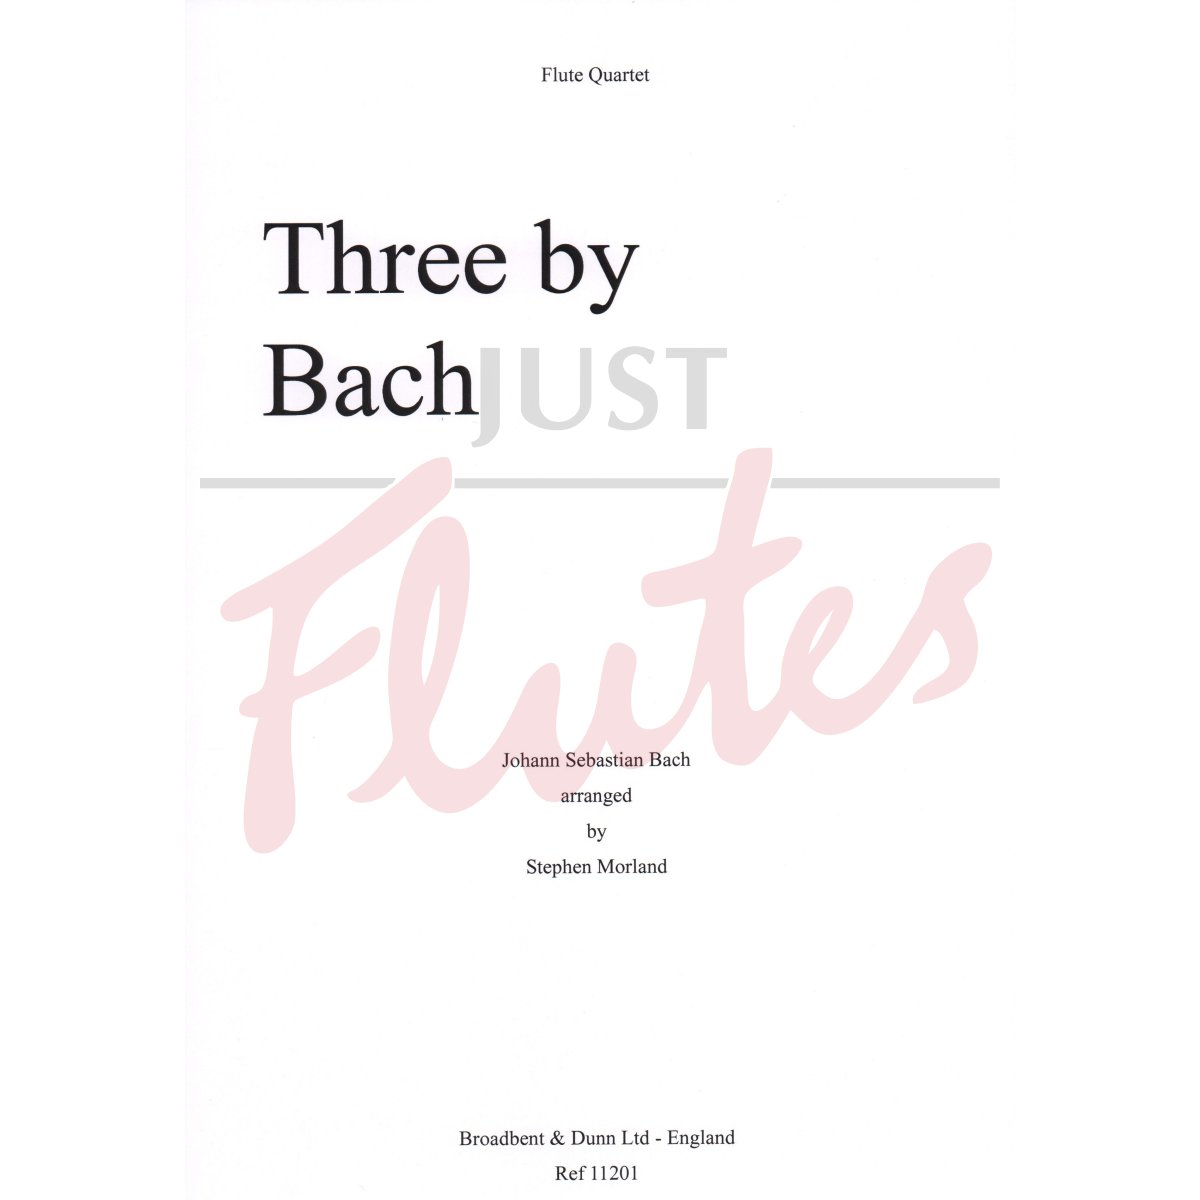 Three by Bach for Flute Quartet